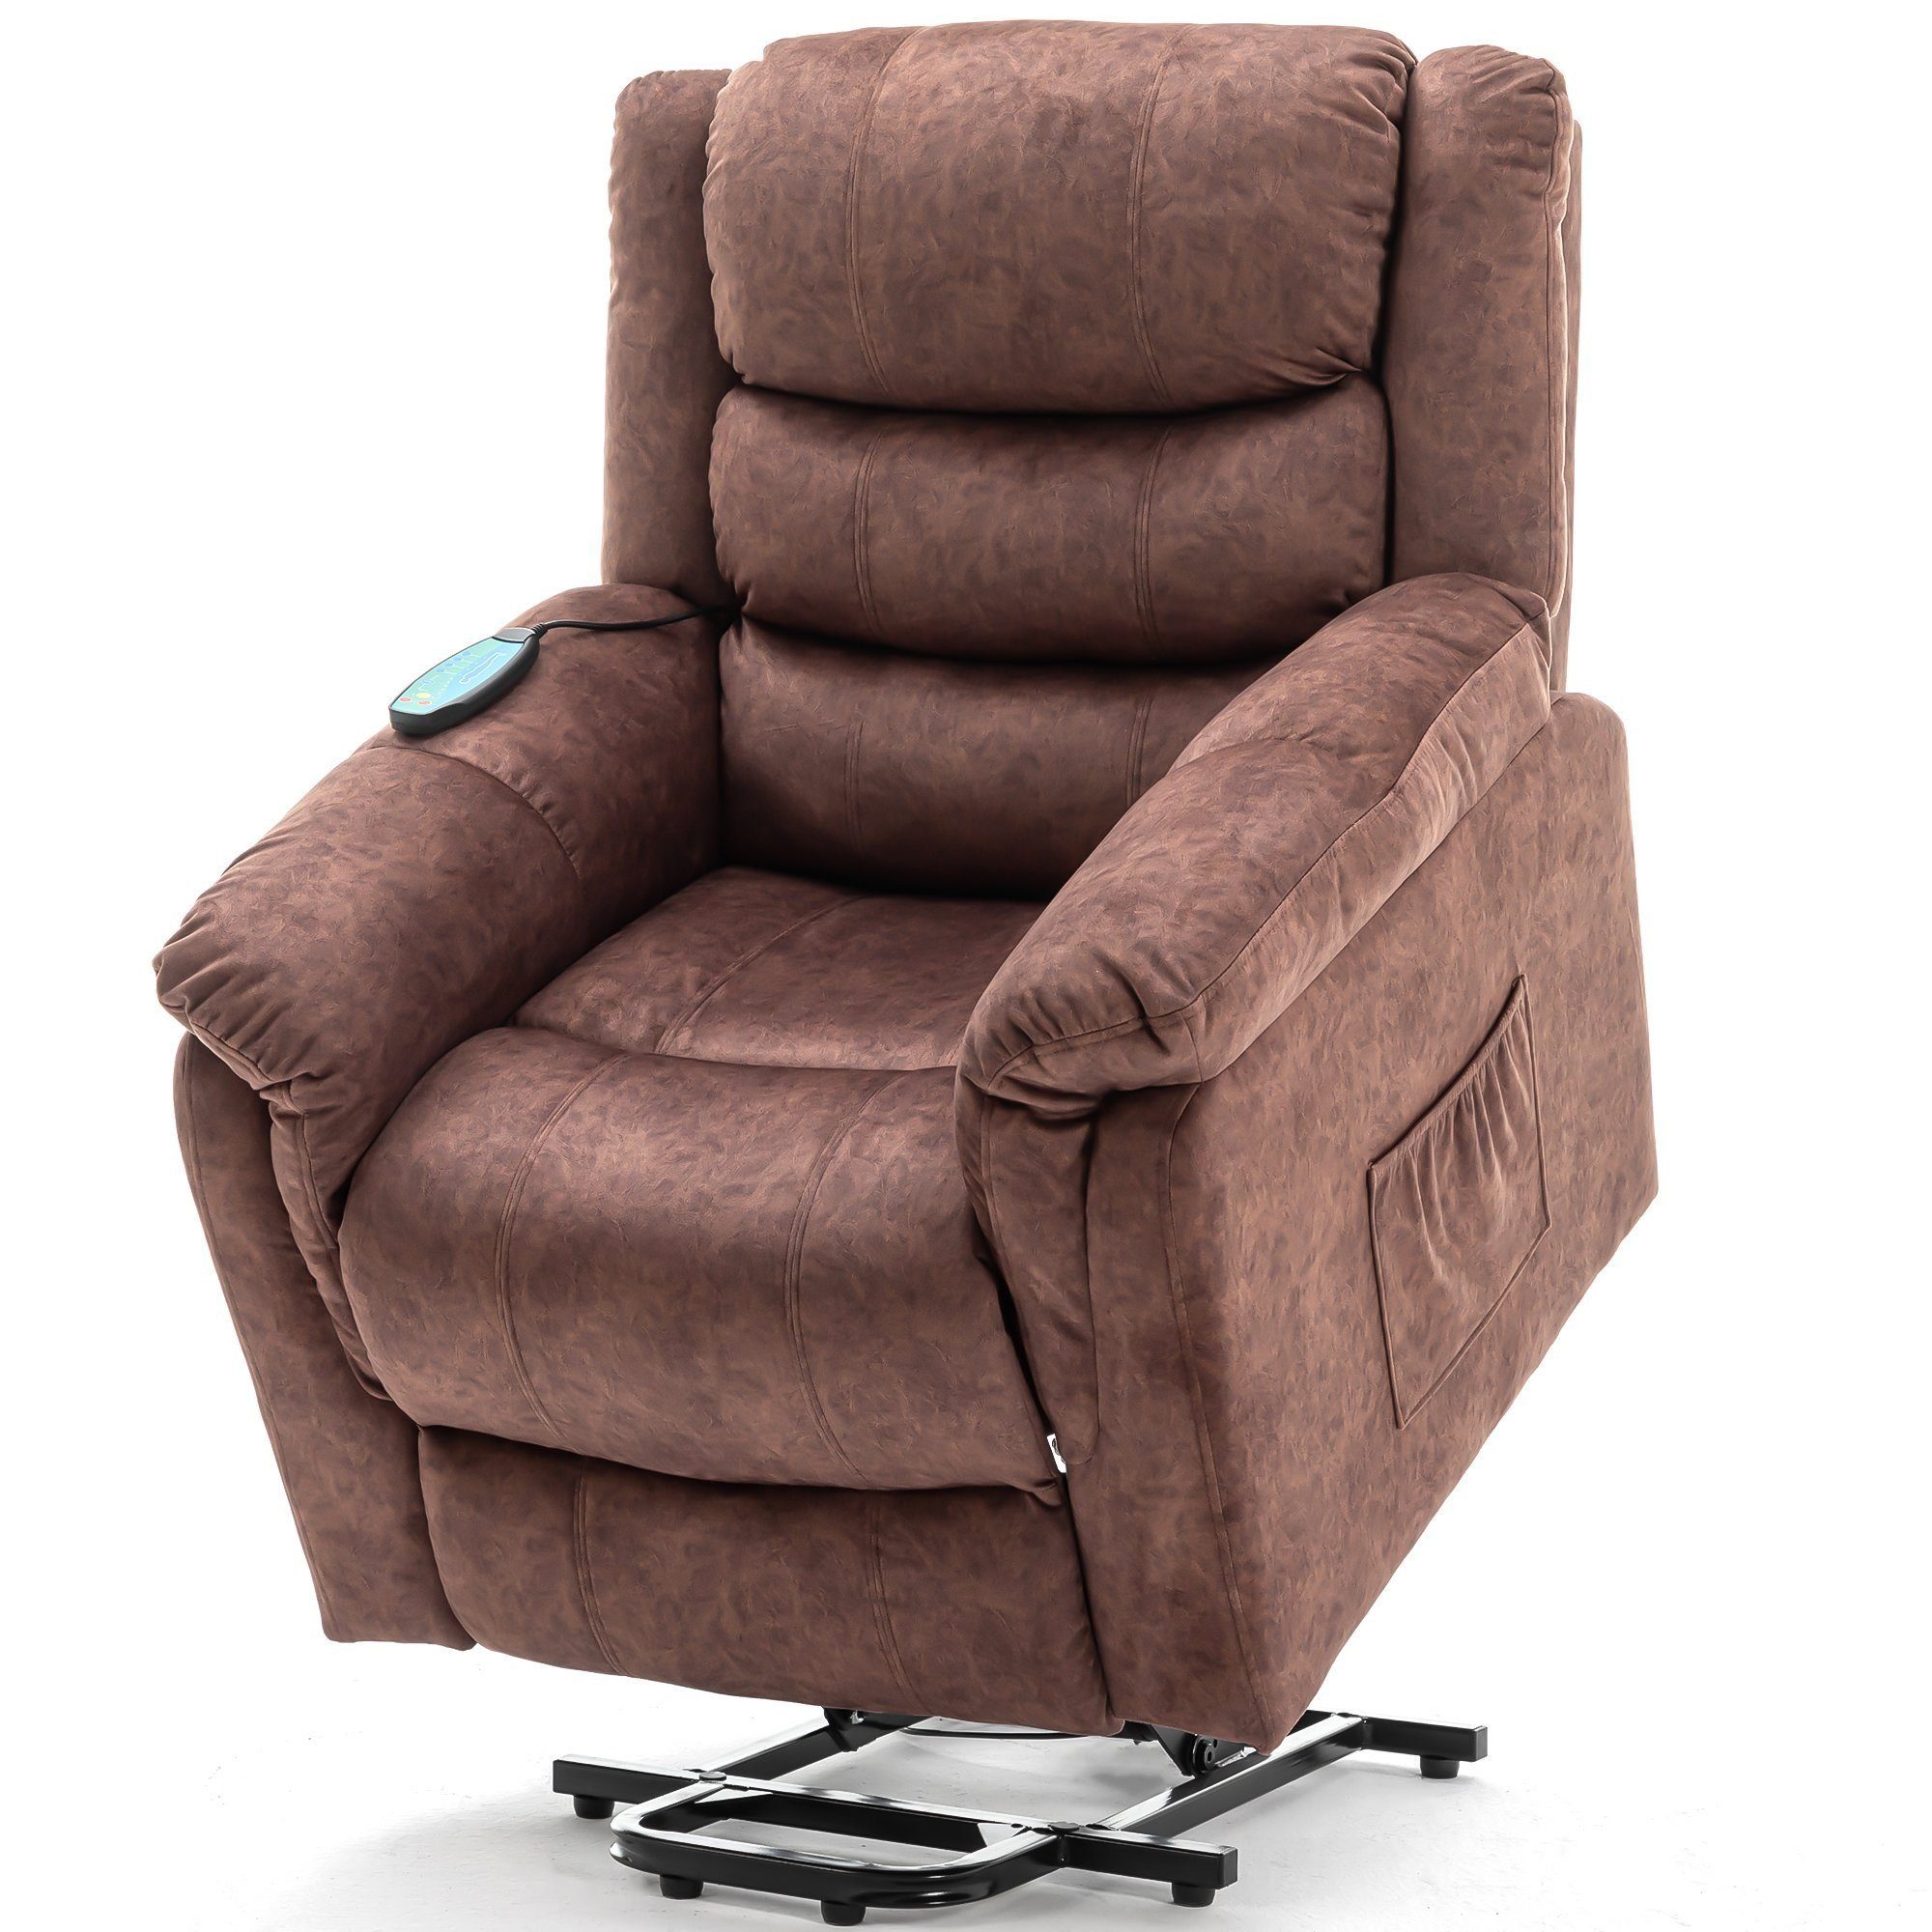 DOTMALL Massagesessel Power Massagelift-Liegestuhl mit Wärme und Vibration,rutschfestes Braun